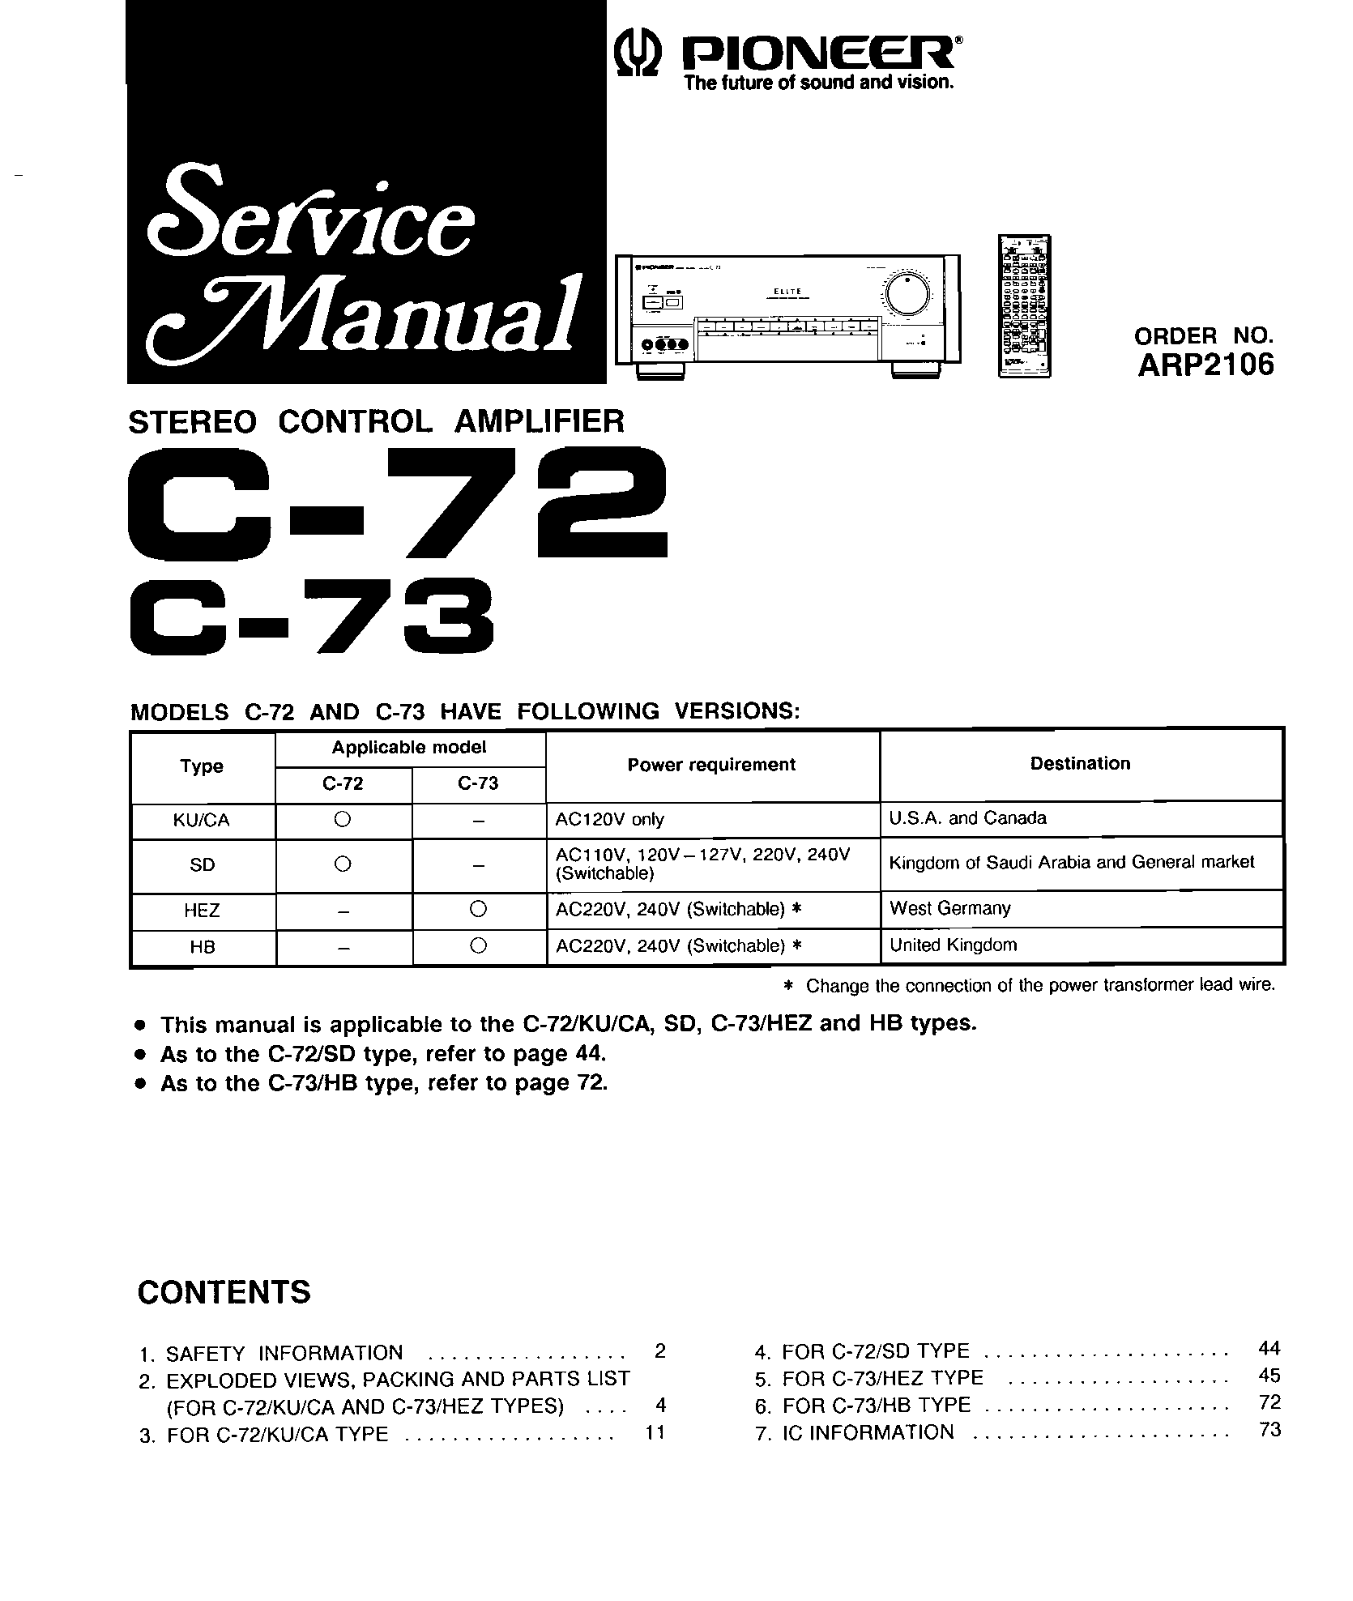 Pioneer C-73 Service Manual